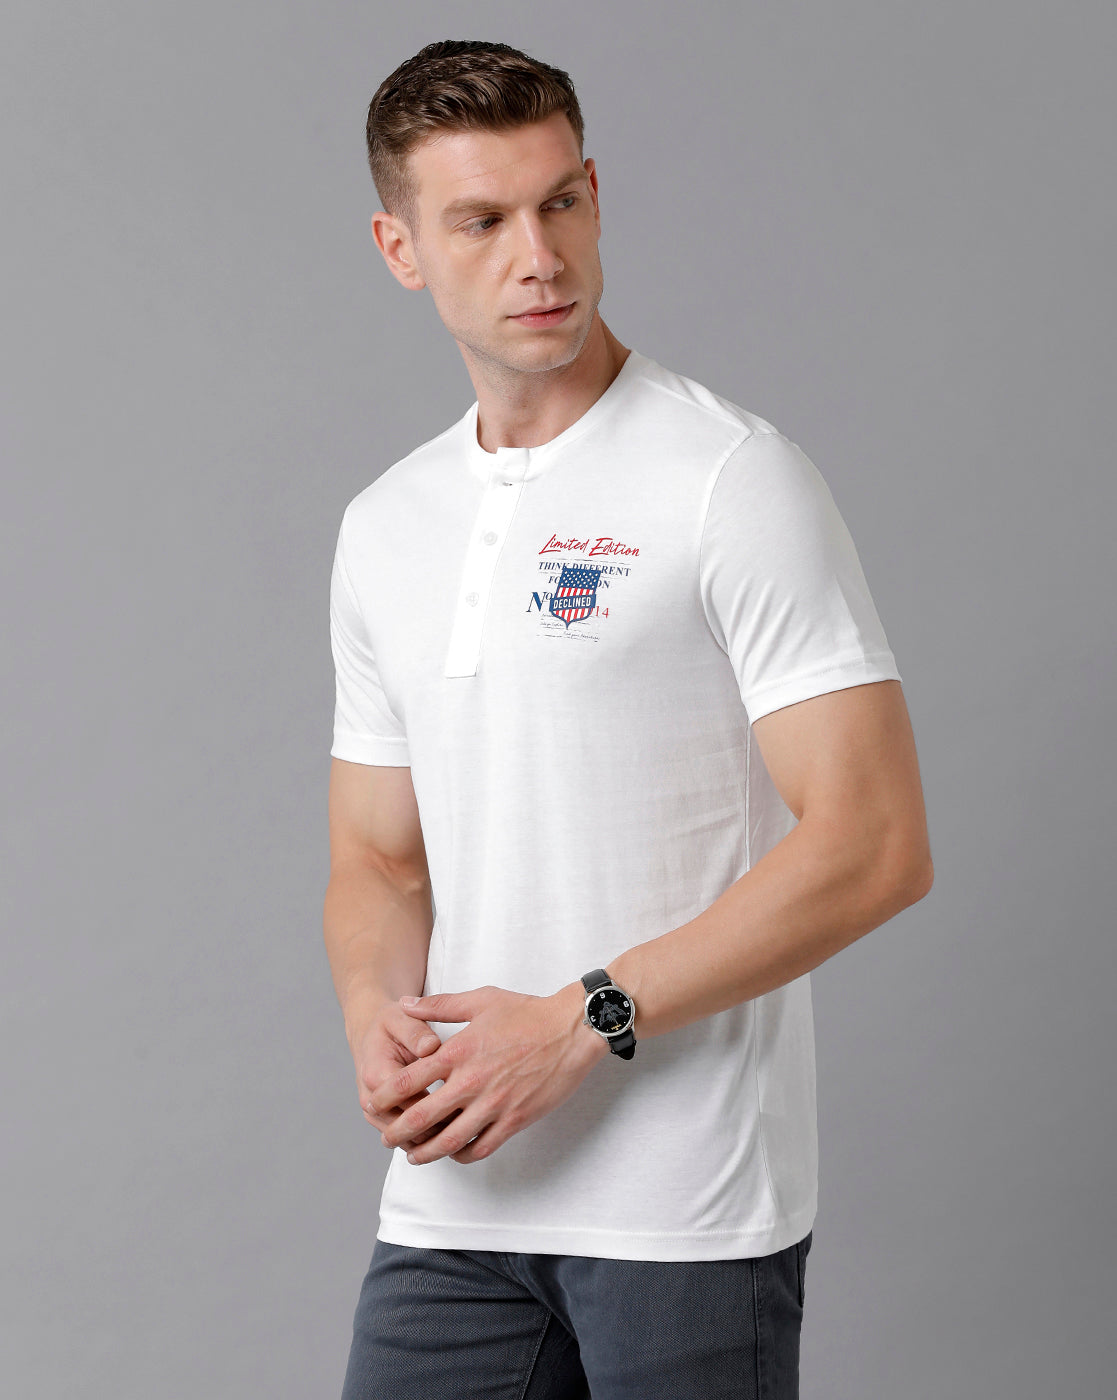 CP BRO Men's Cotton Printed Half Sleeve Slim Fit Round Neck White Color T-Shirt | Brcn - 486 B